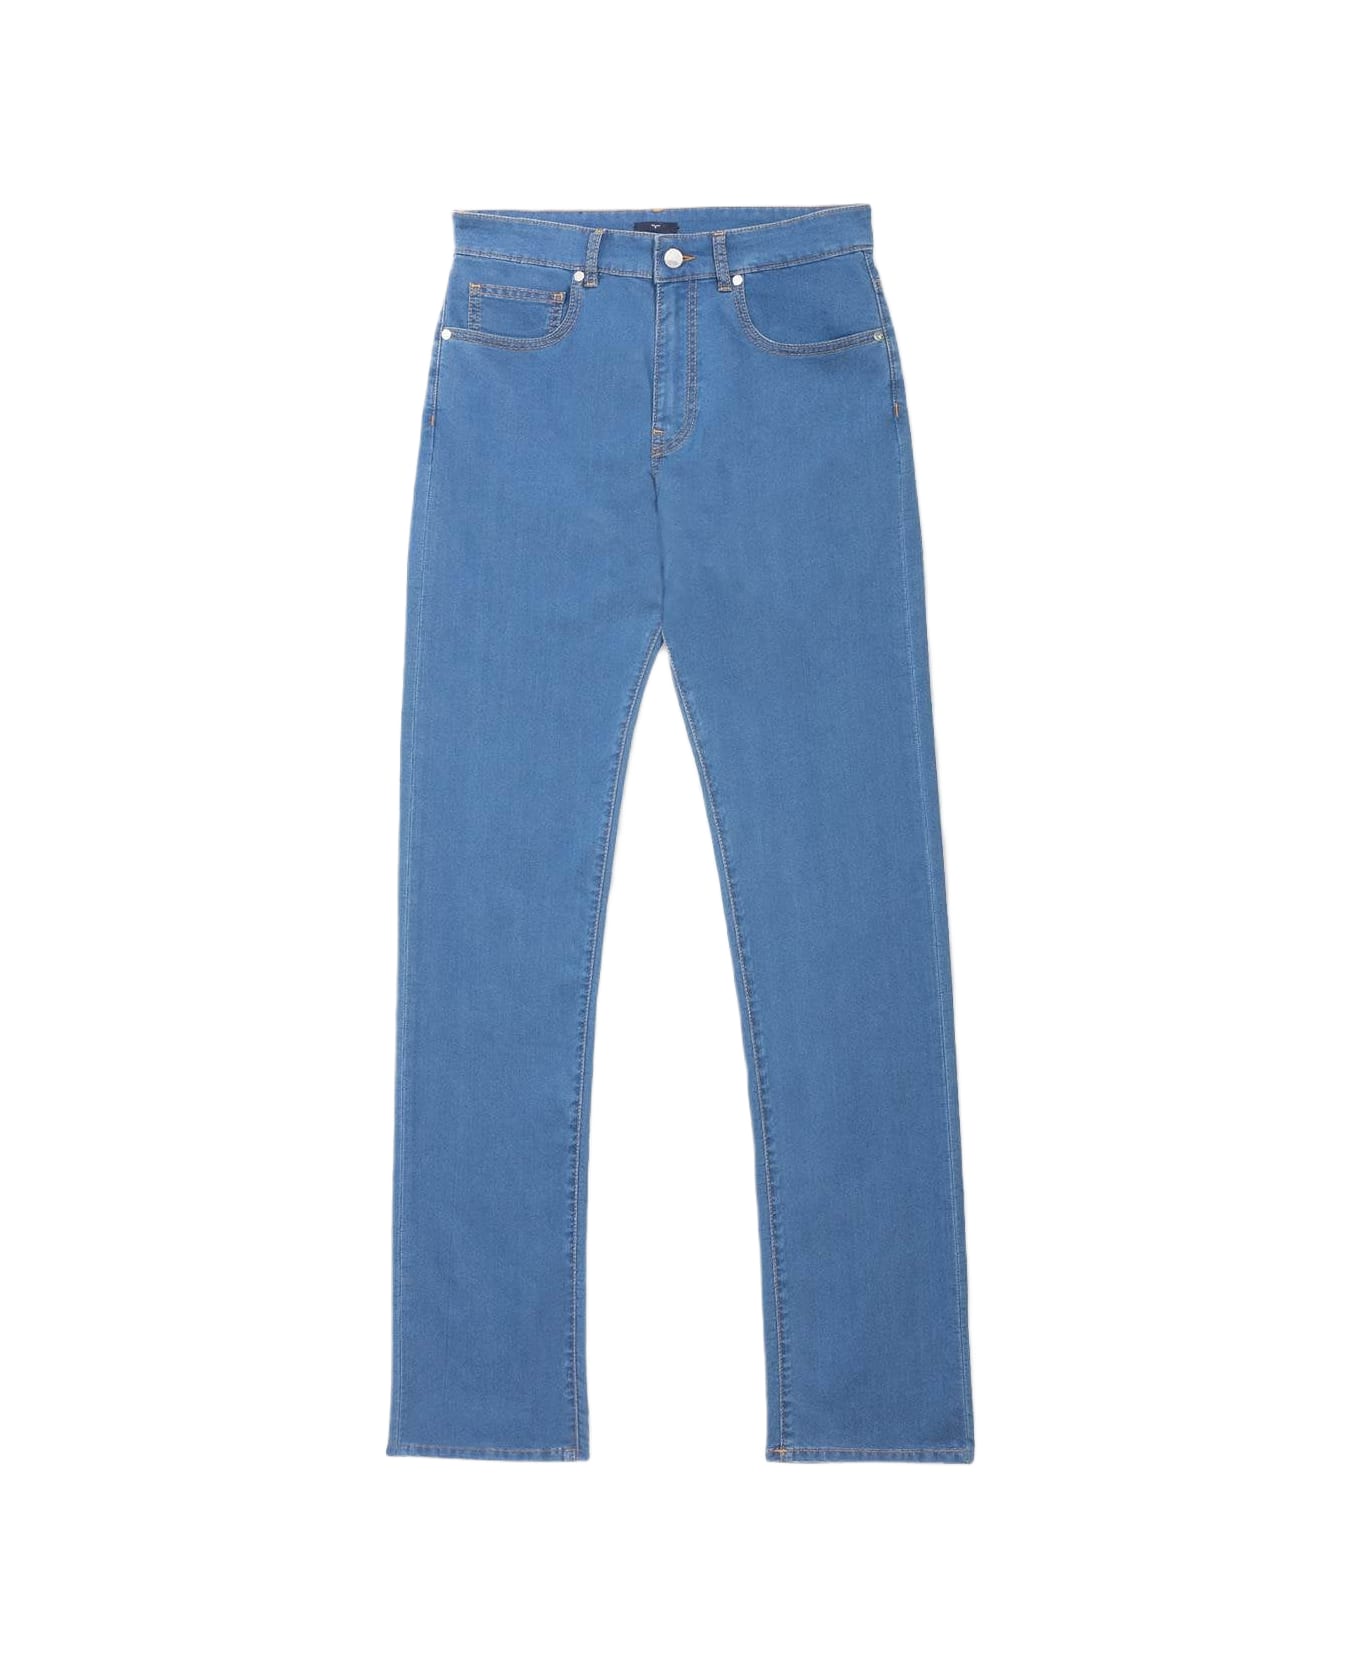 Larusmiani Trousers Jeans Five Pockets Jeans - LightBlue